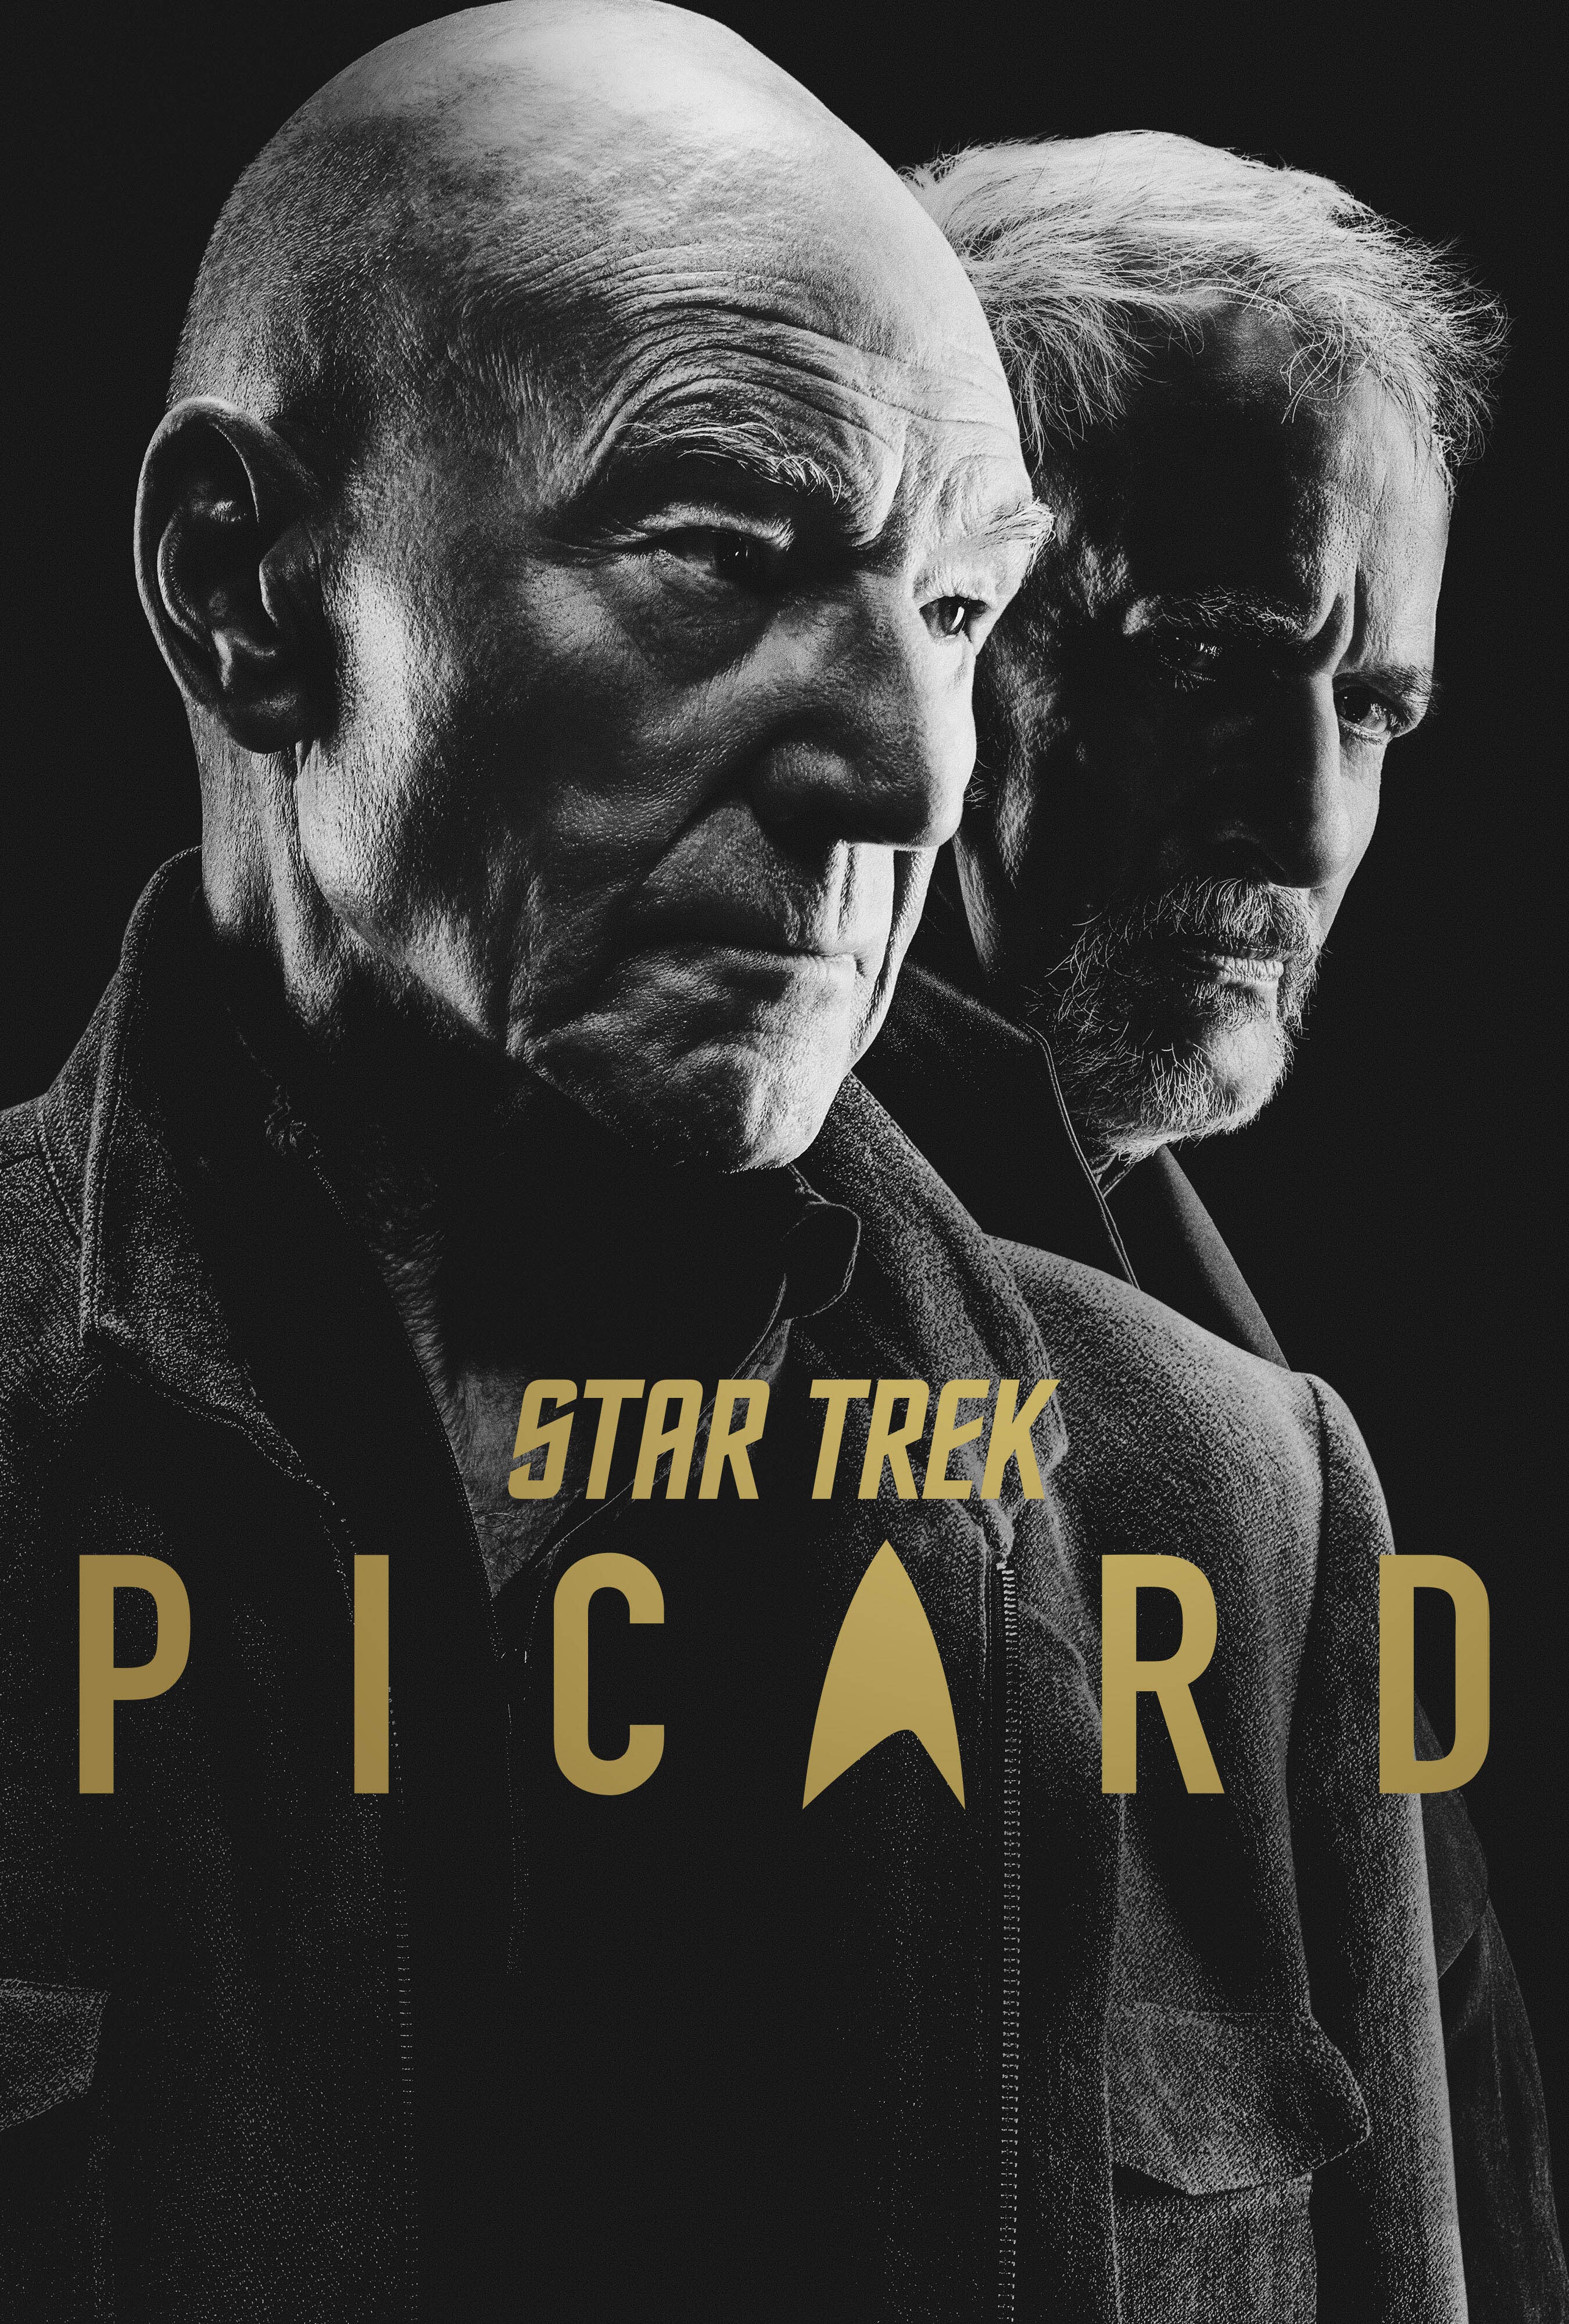 Star Trek: Picard Season Two Key Art Revealed